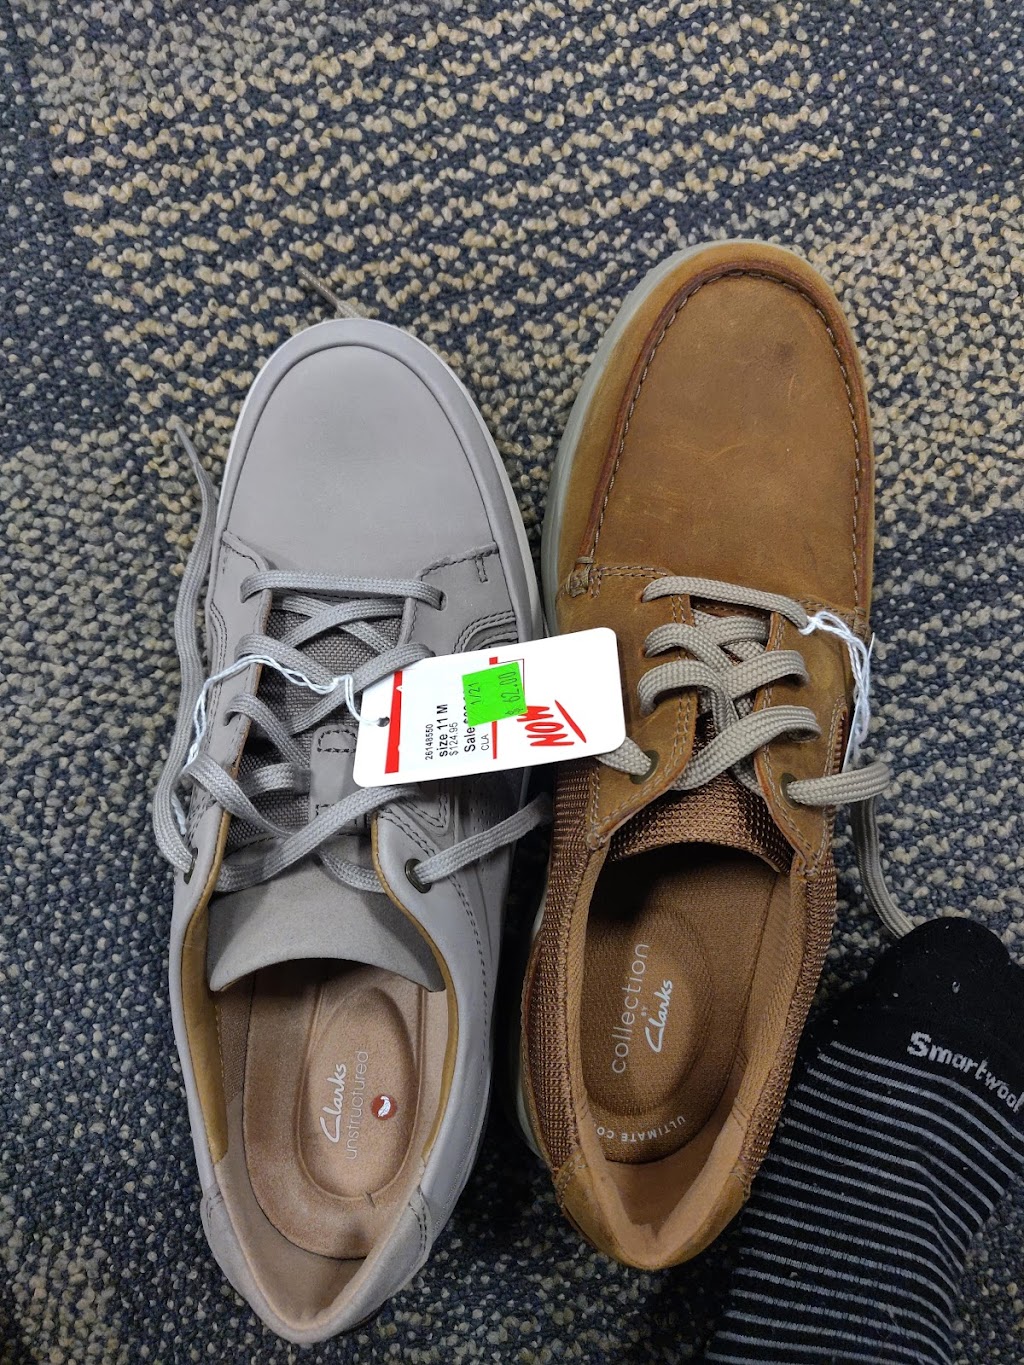 Schuler Shoes: Maple Grove | 11400 Elm Creek Blvd N, Maple Grove, MN 55369, USA | Phone: (763) 494-4878